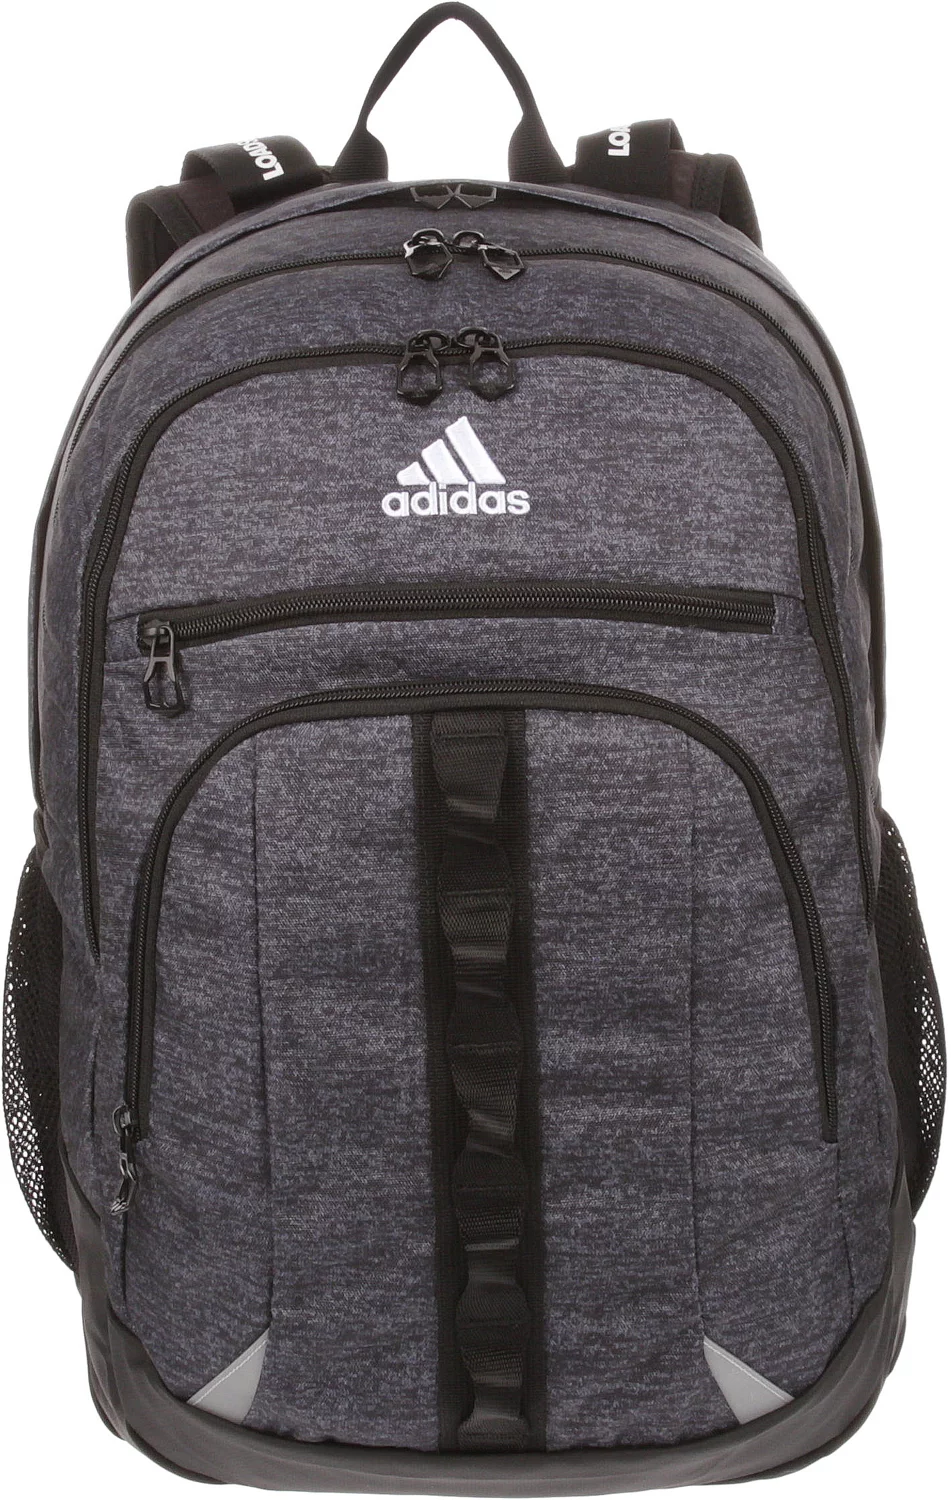 adidas computer backpack